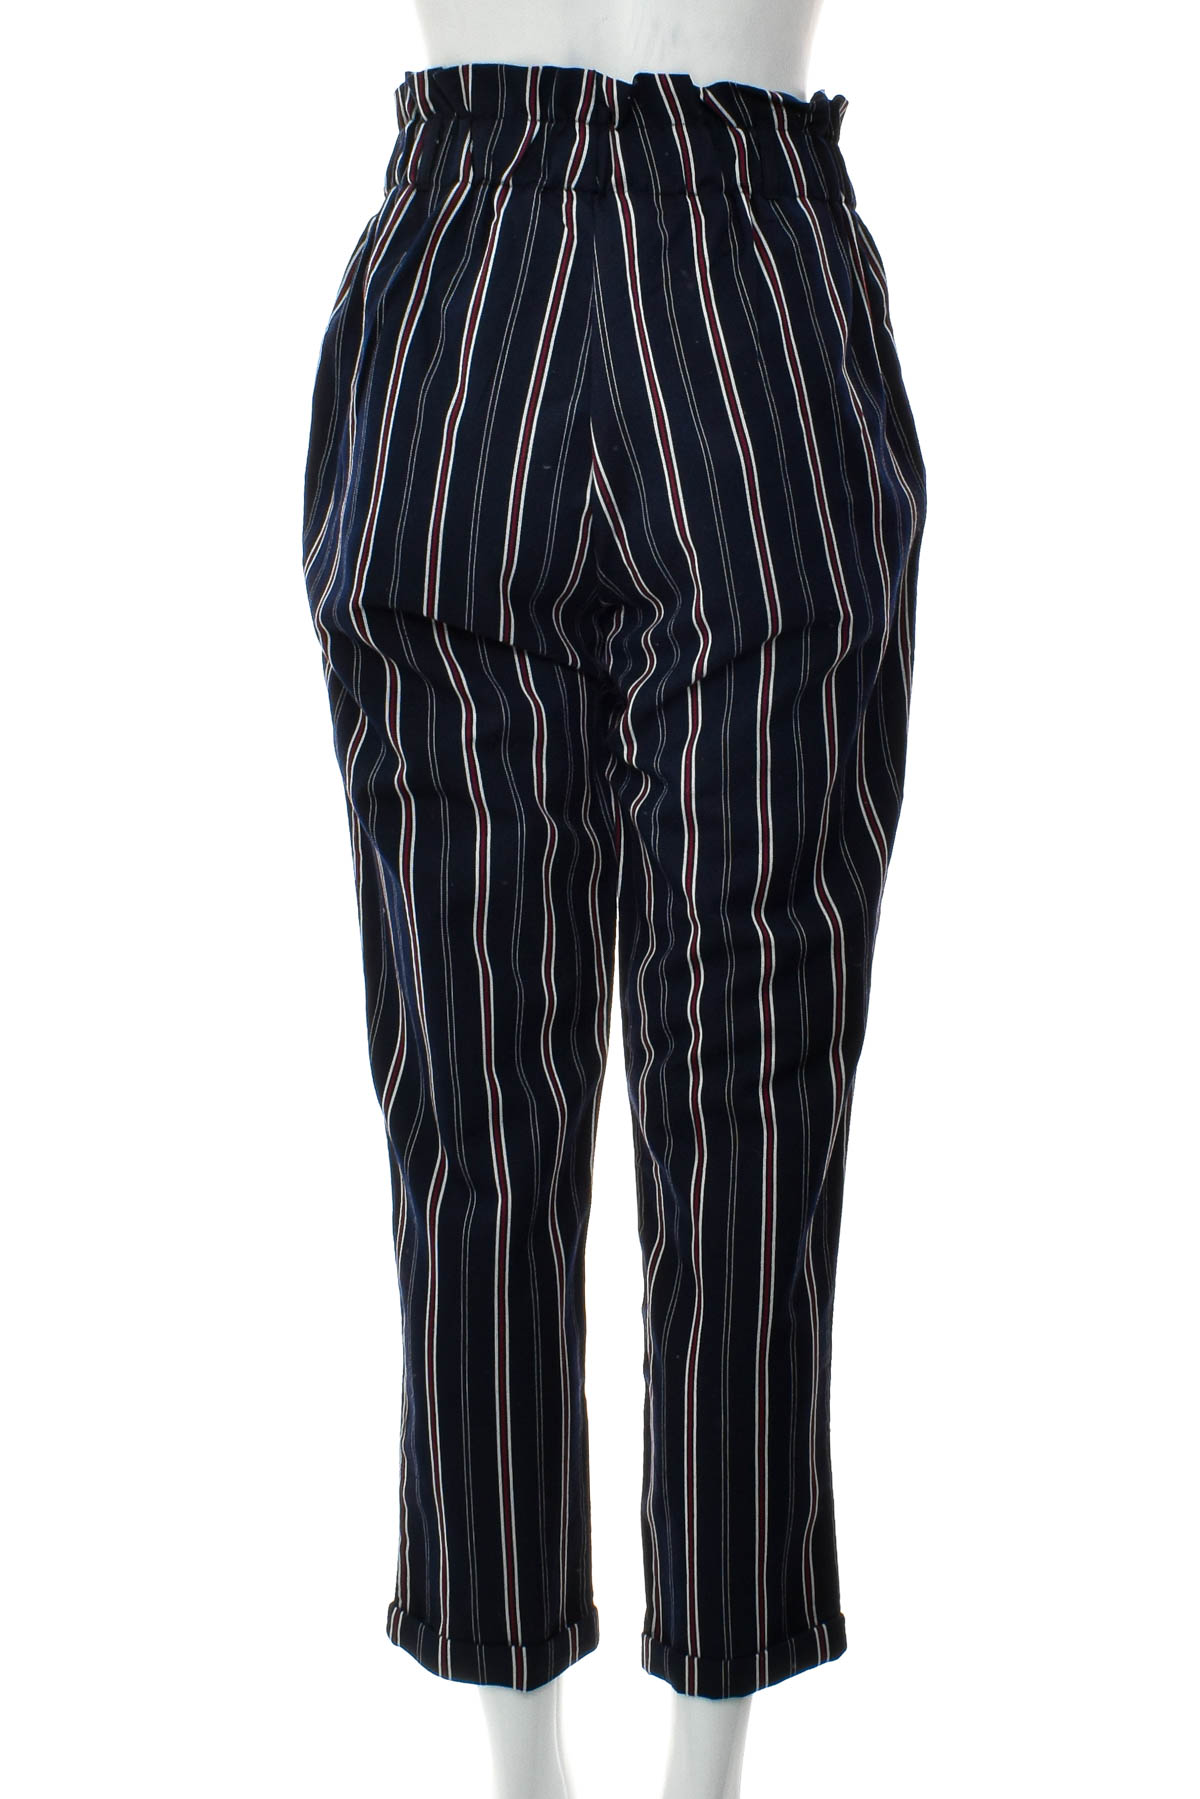 Women's trousers - MRP Mr Price - 1